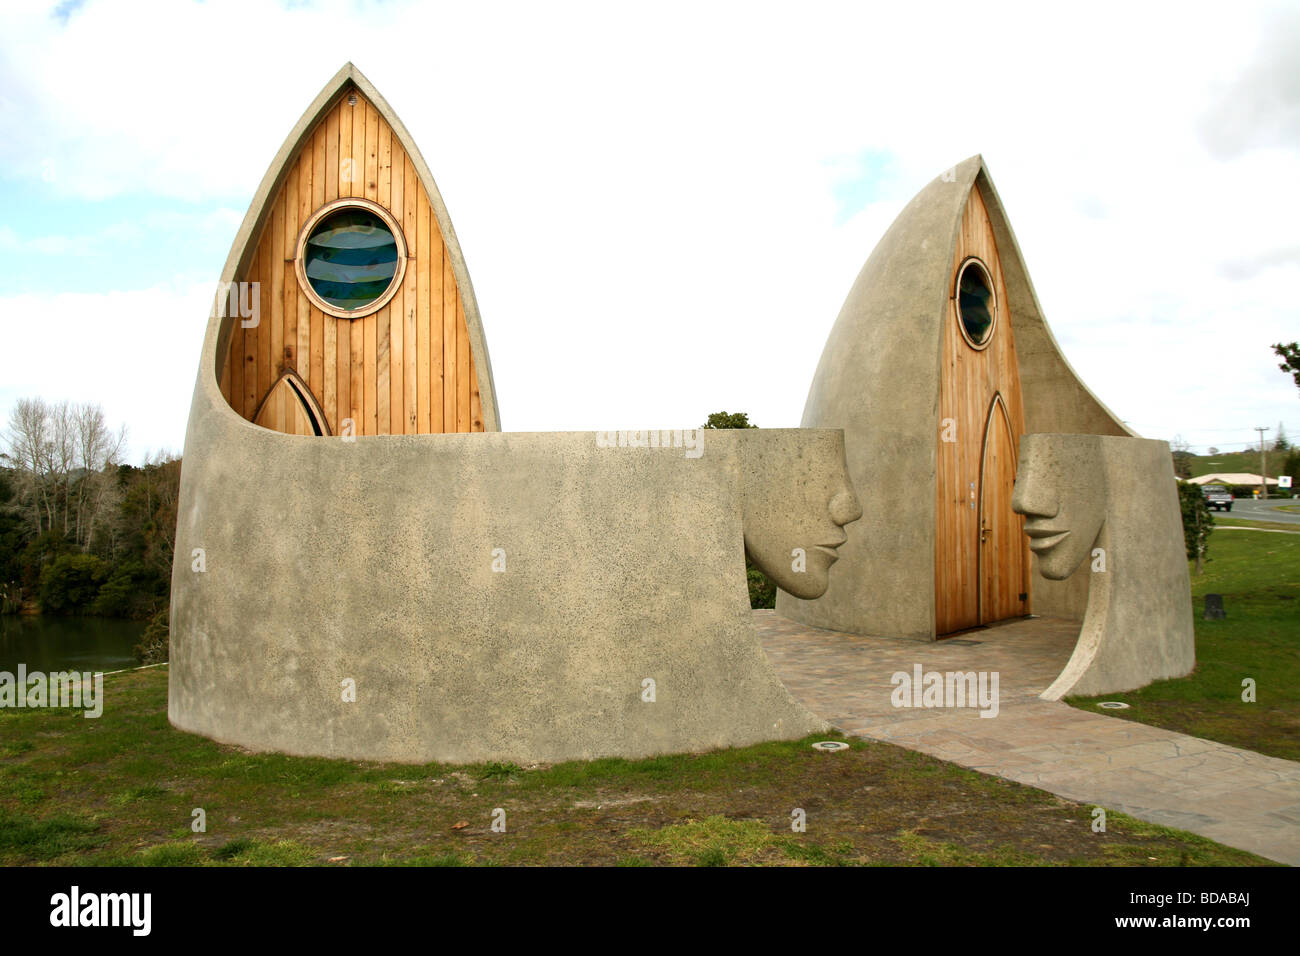 Architect designed public toilets in New Zealand Stock Photo